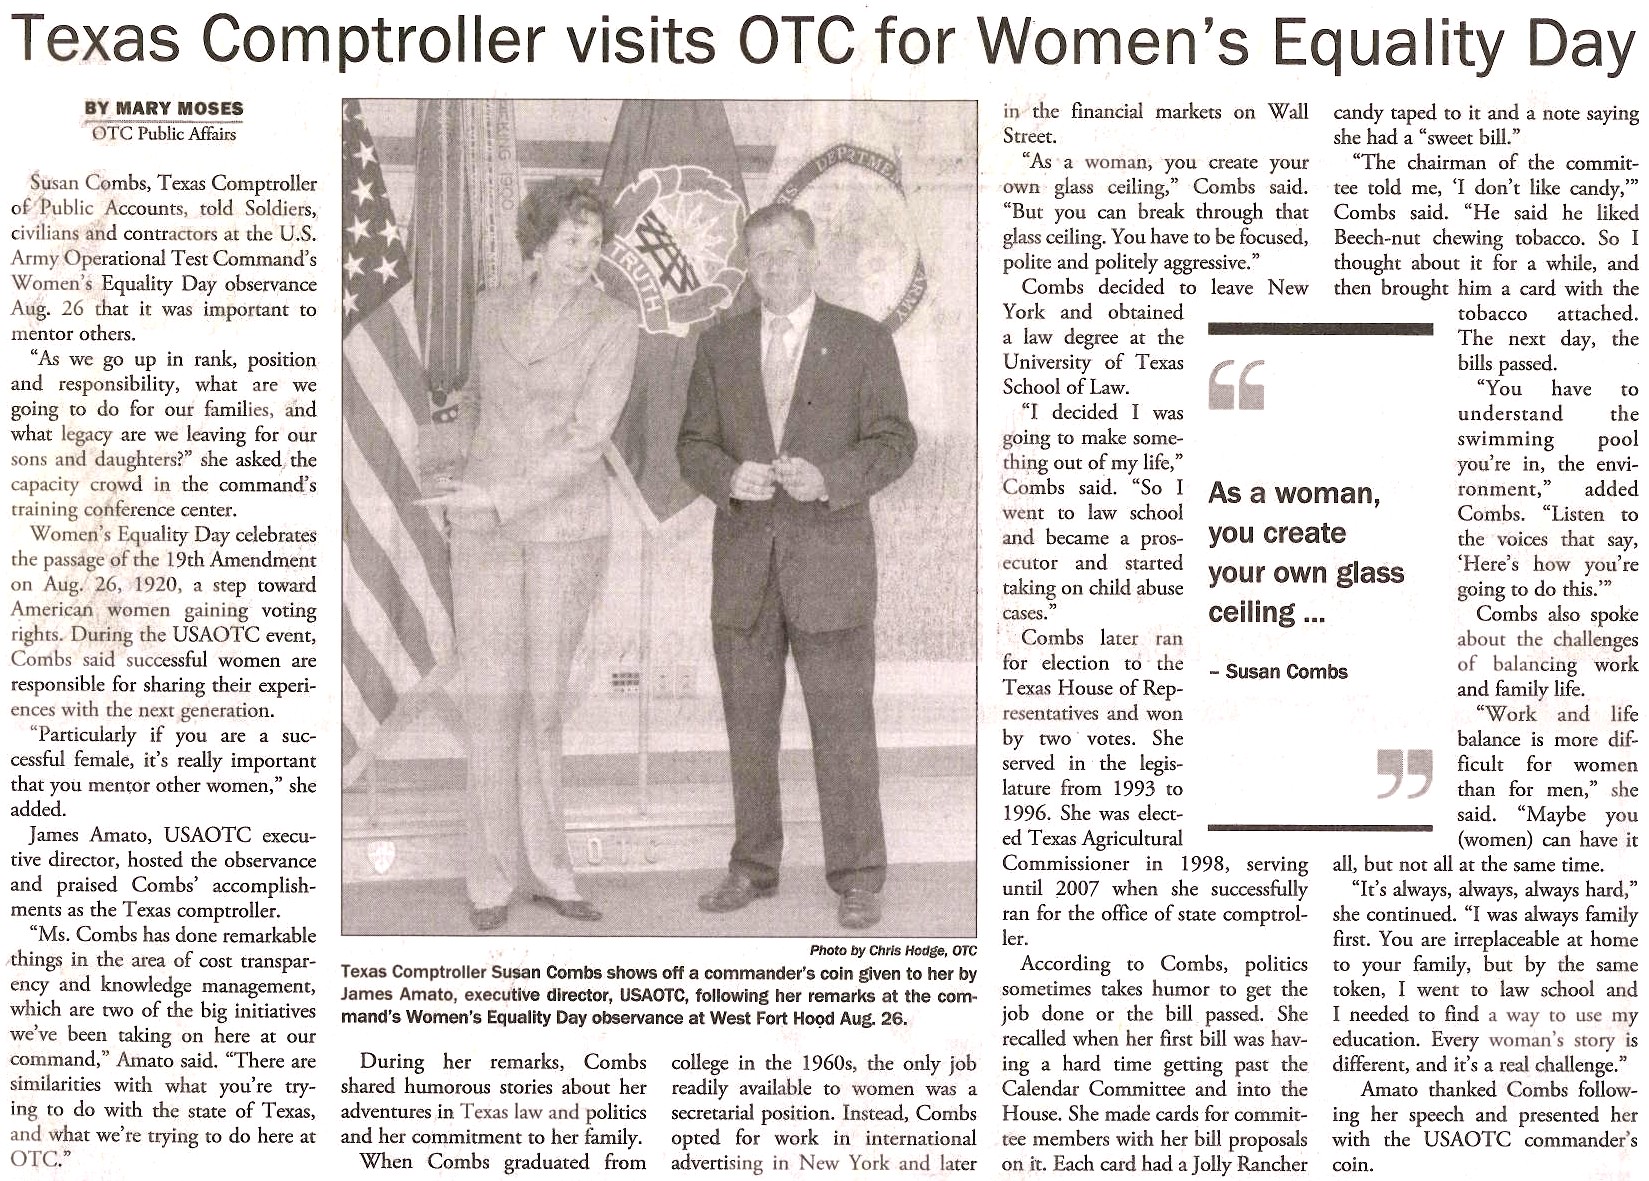 Combs visit to OTC